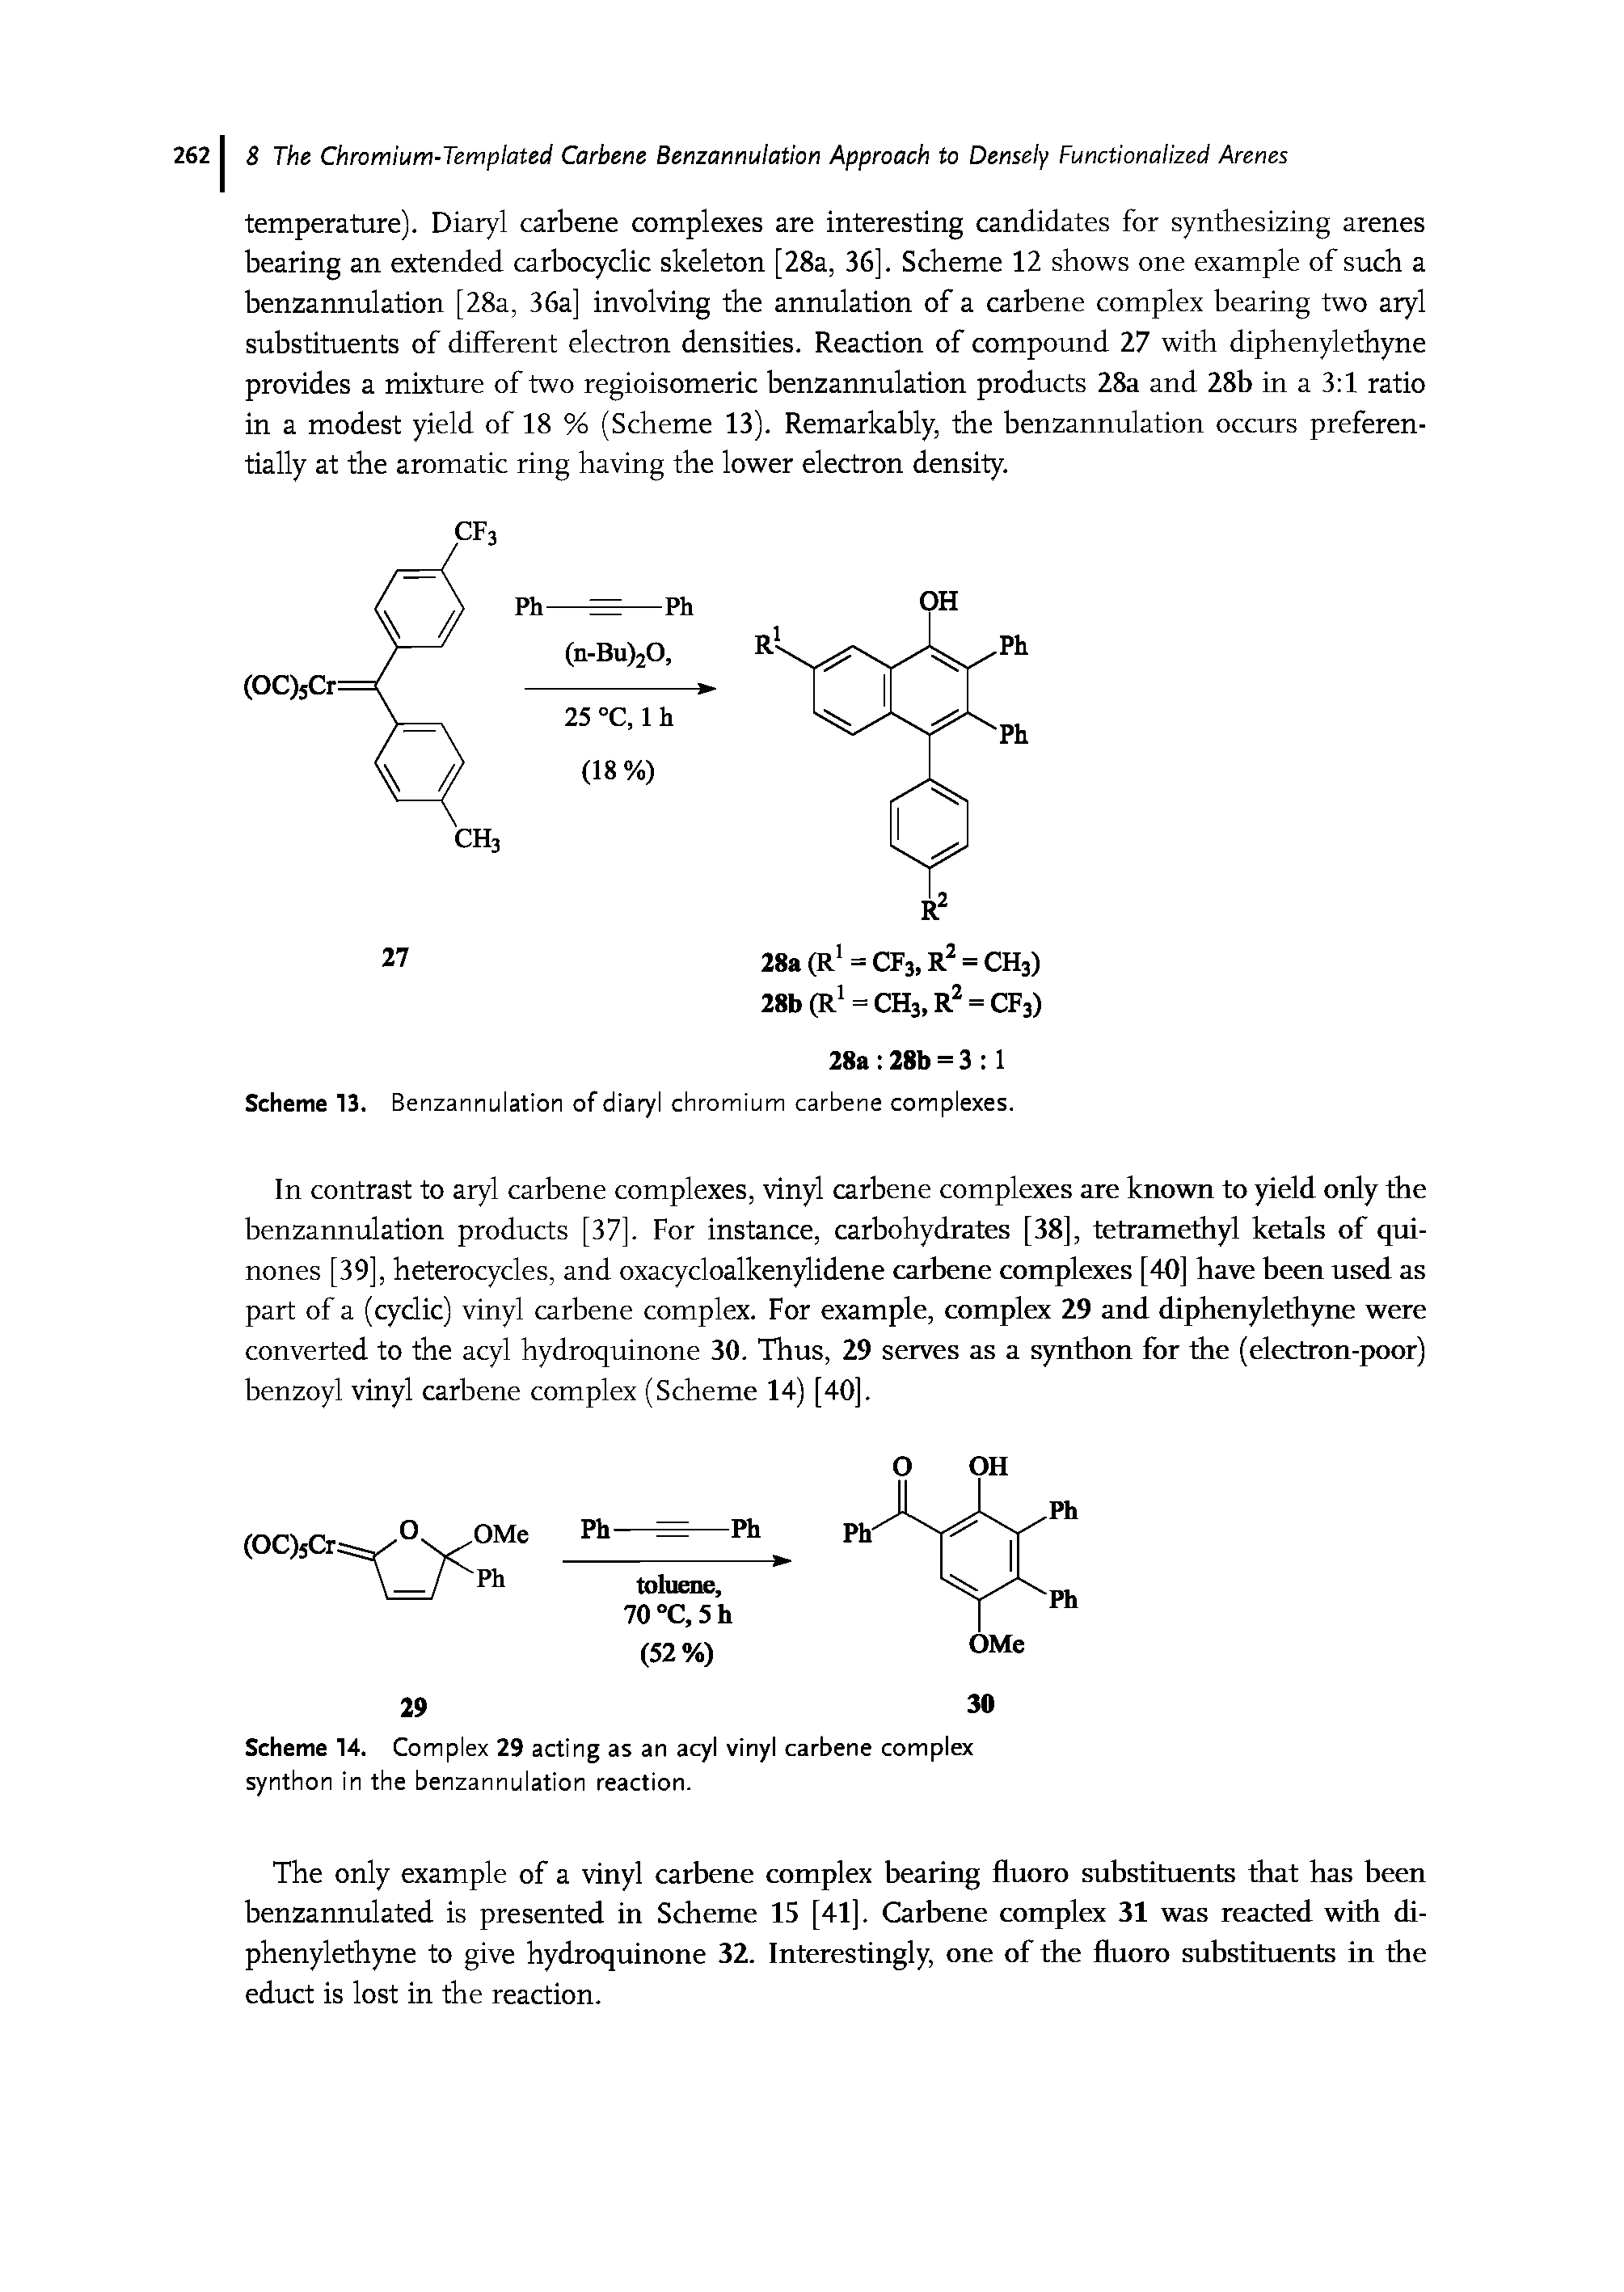 Scheme 13. Benzannulation of diaryl chromium carbene complexes.